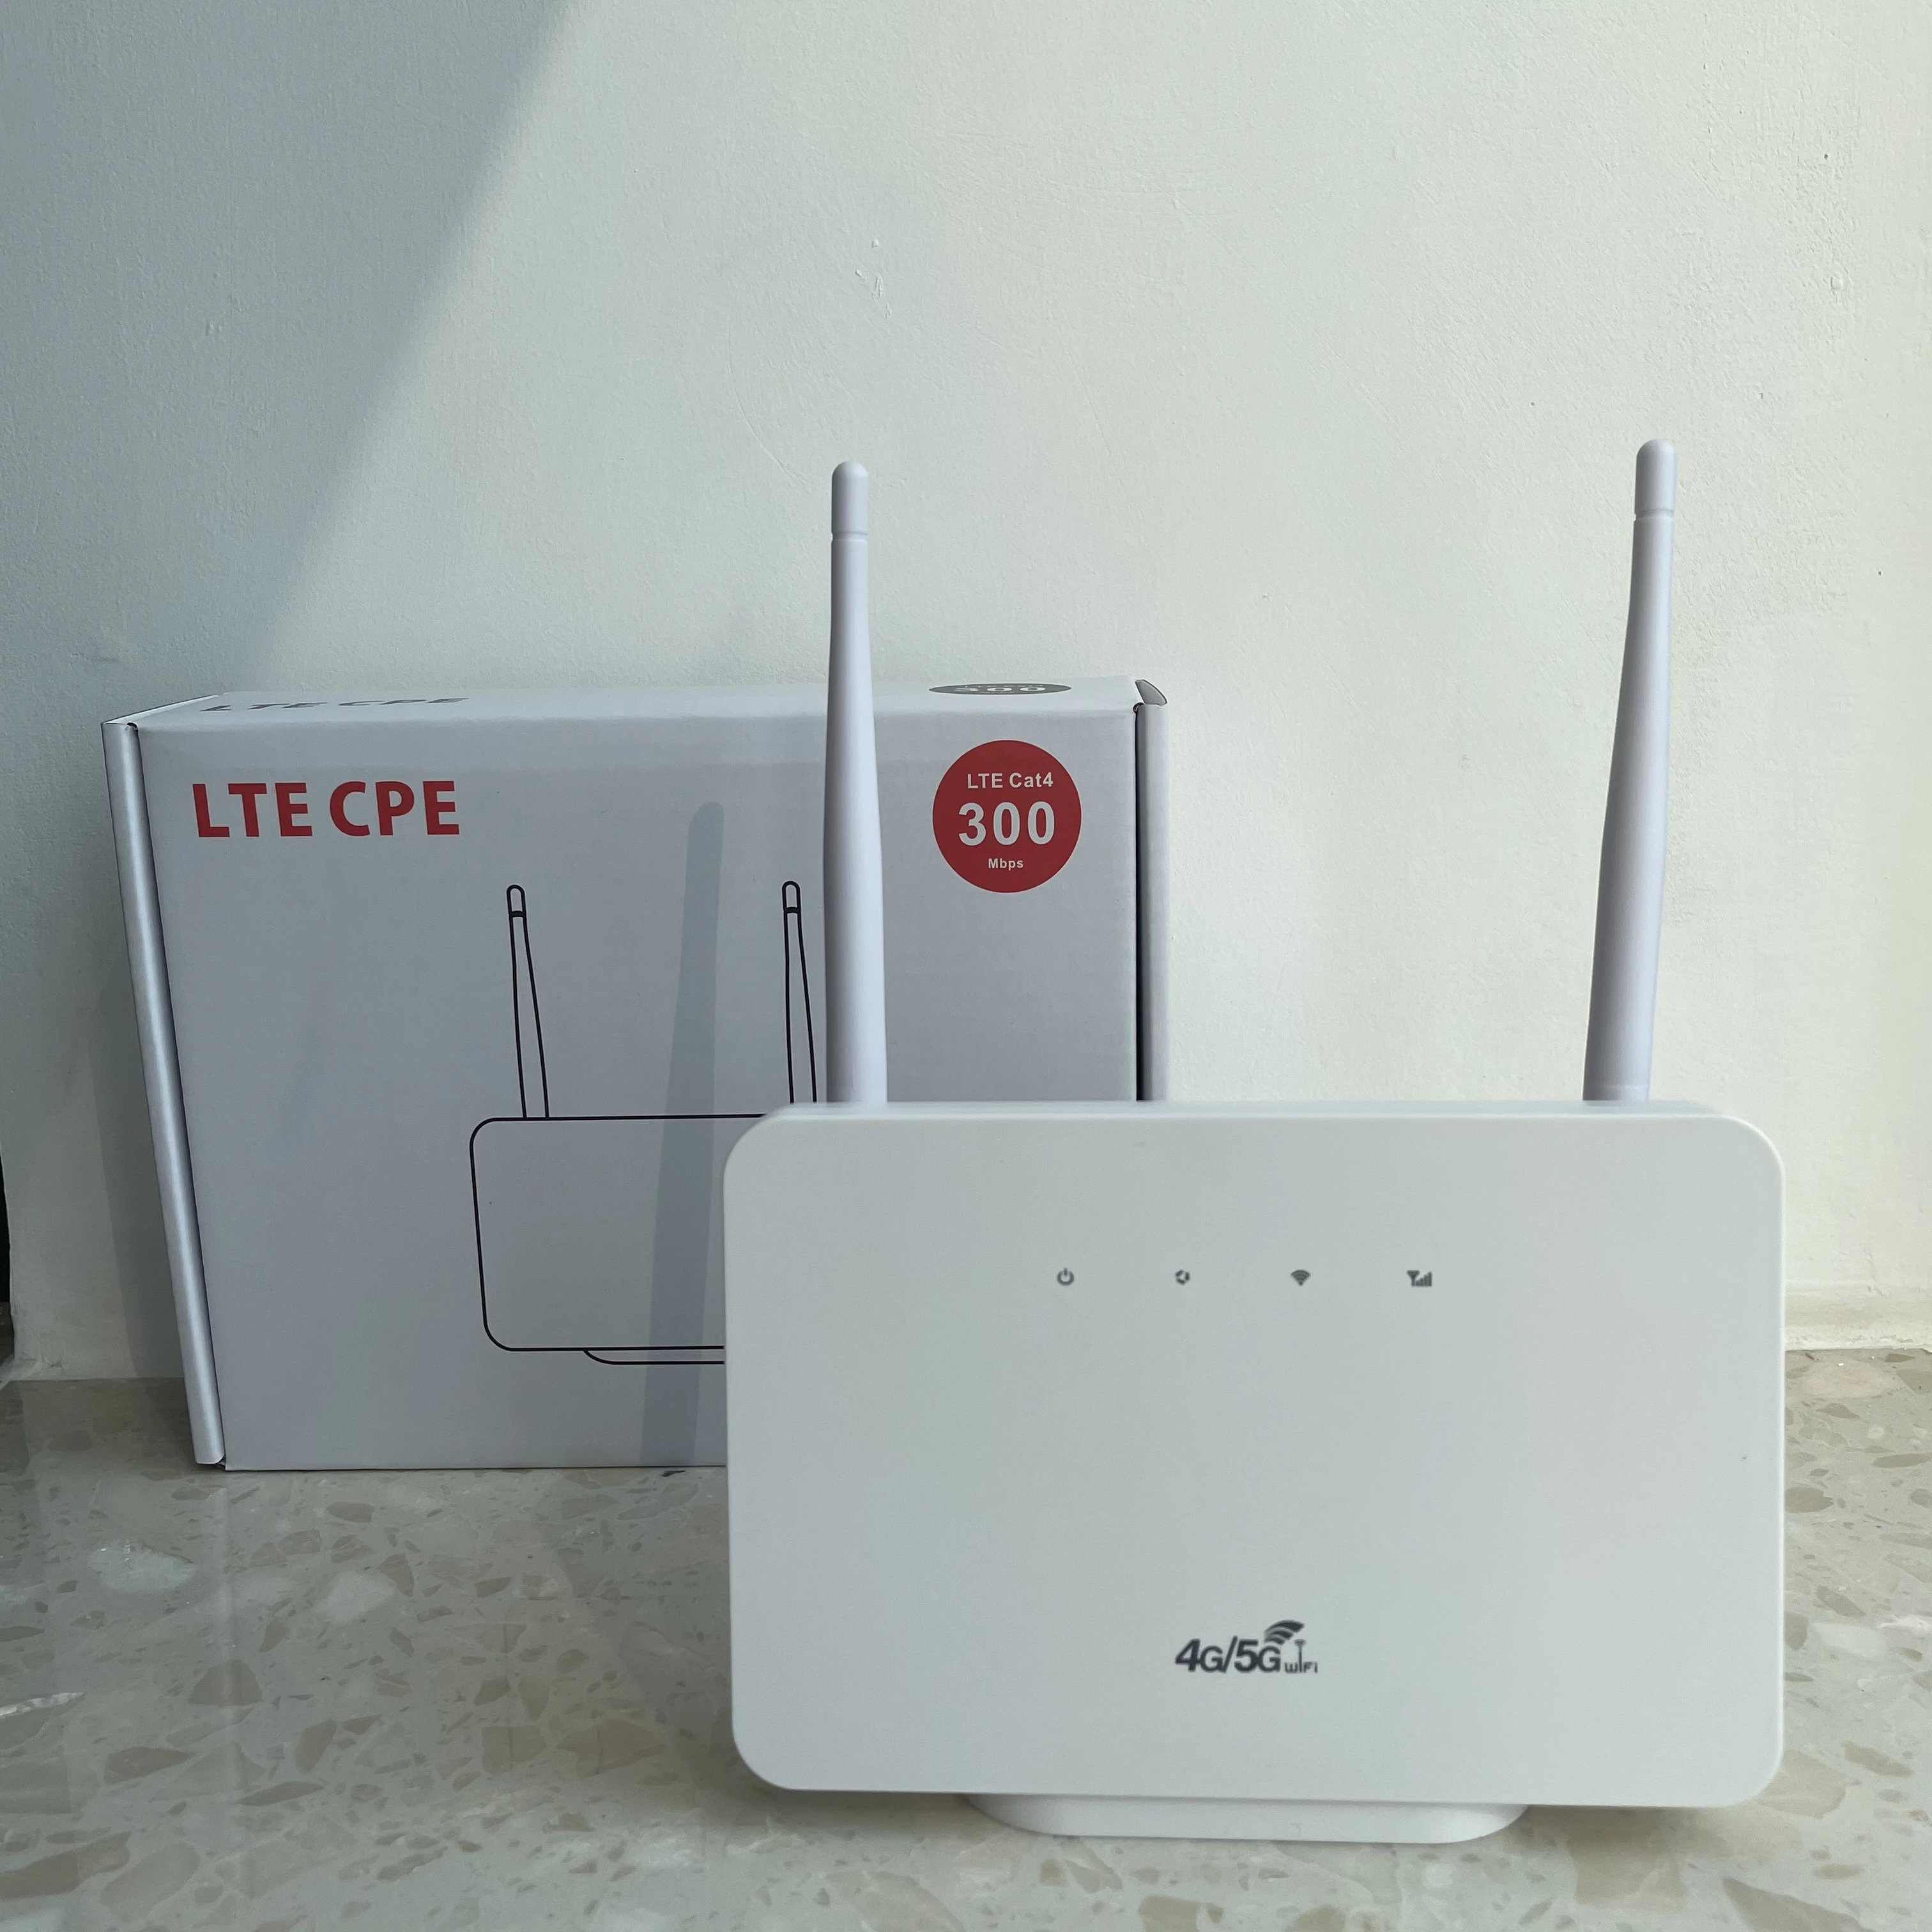 

Universal Unlocked 4G LTE CPE Router Modem RJ45 LAN WAN External Antenna WiFi Wireless Hotspot with Sim Card Slot PK B593, White